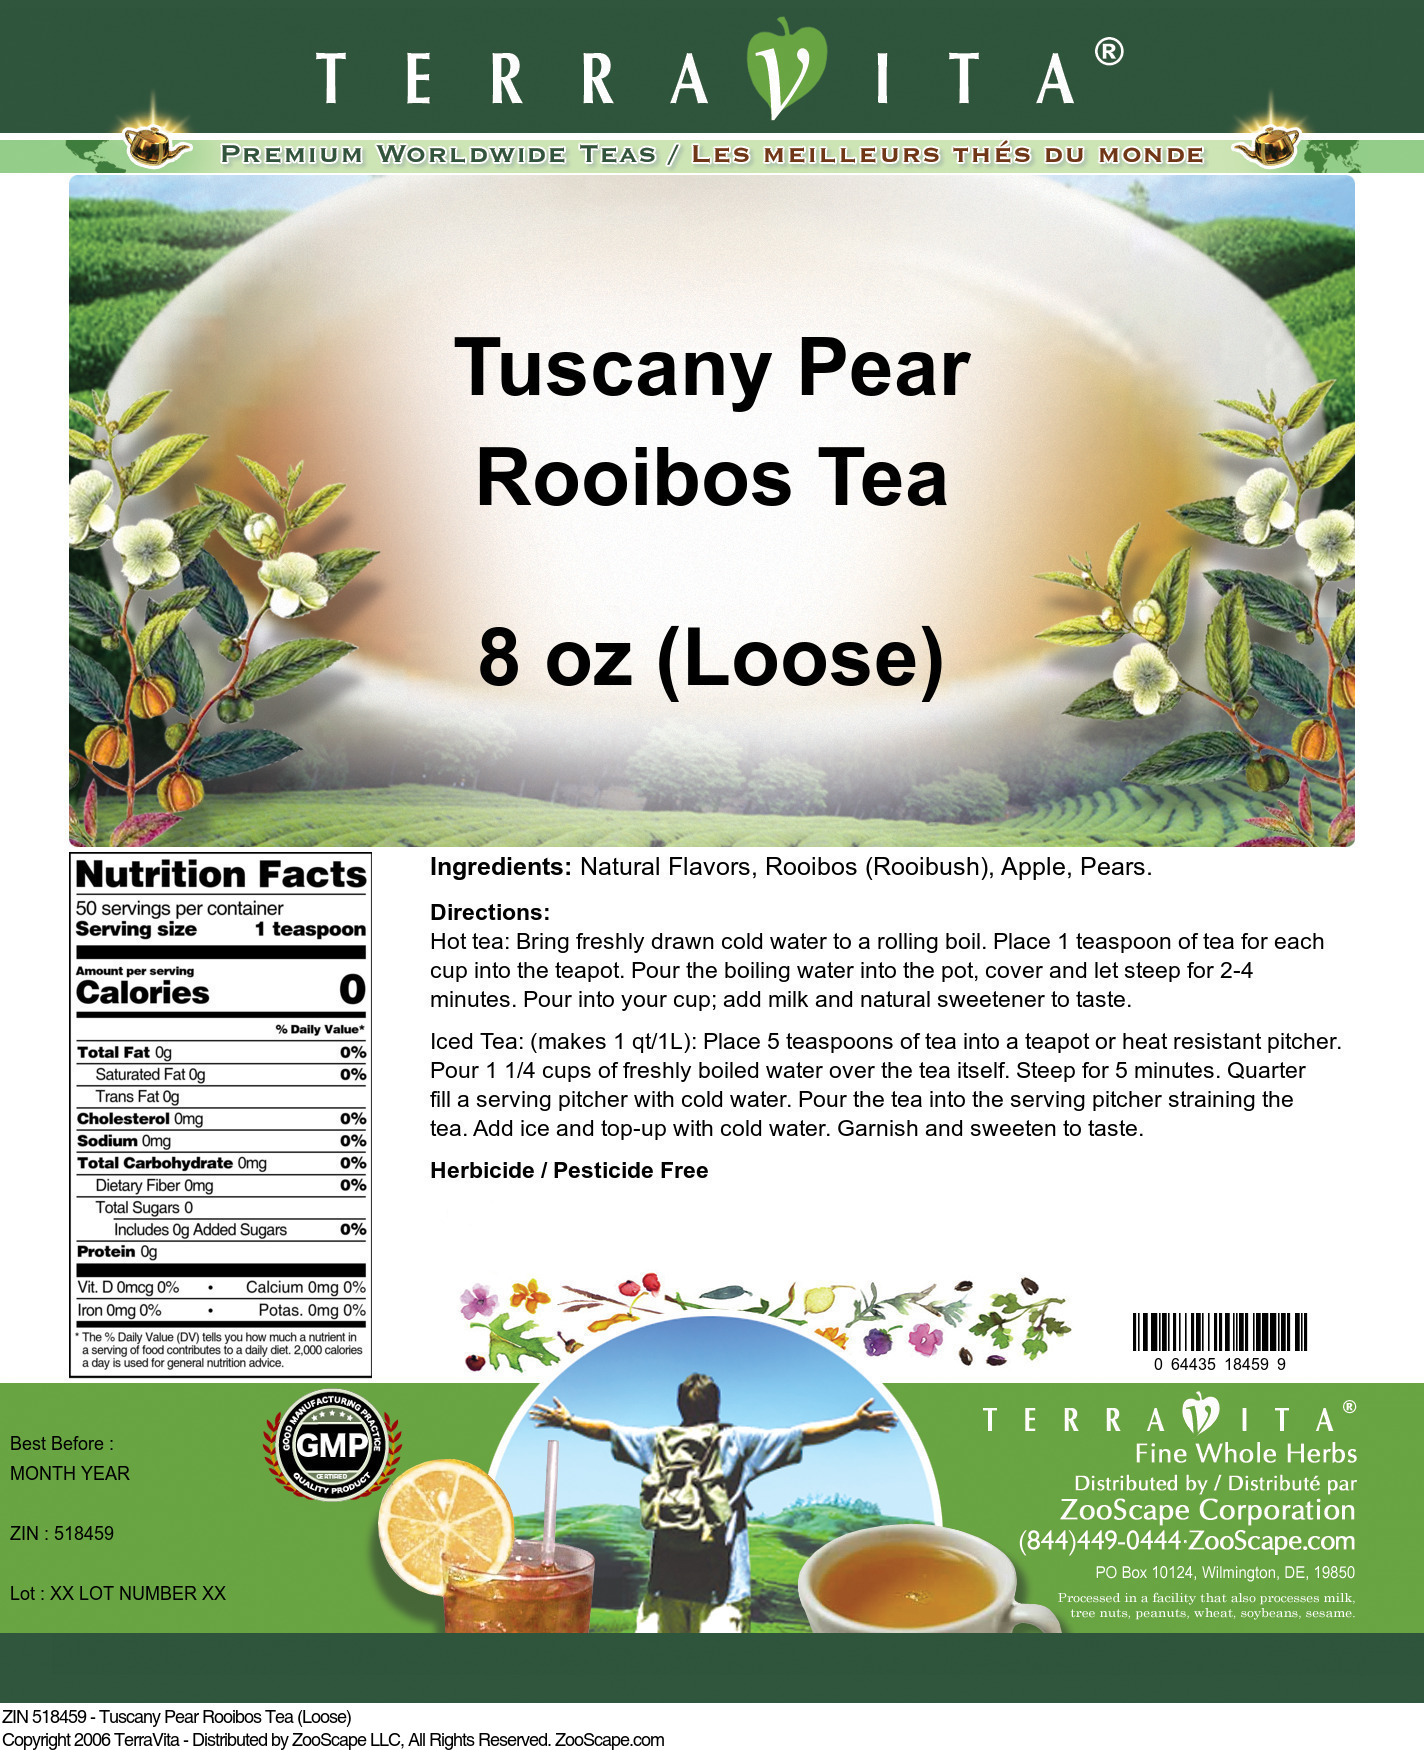 Tuscany Pear Rooibos Tea (Loose) - Label